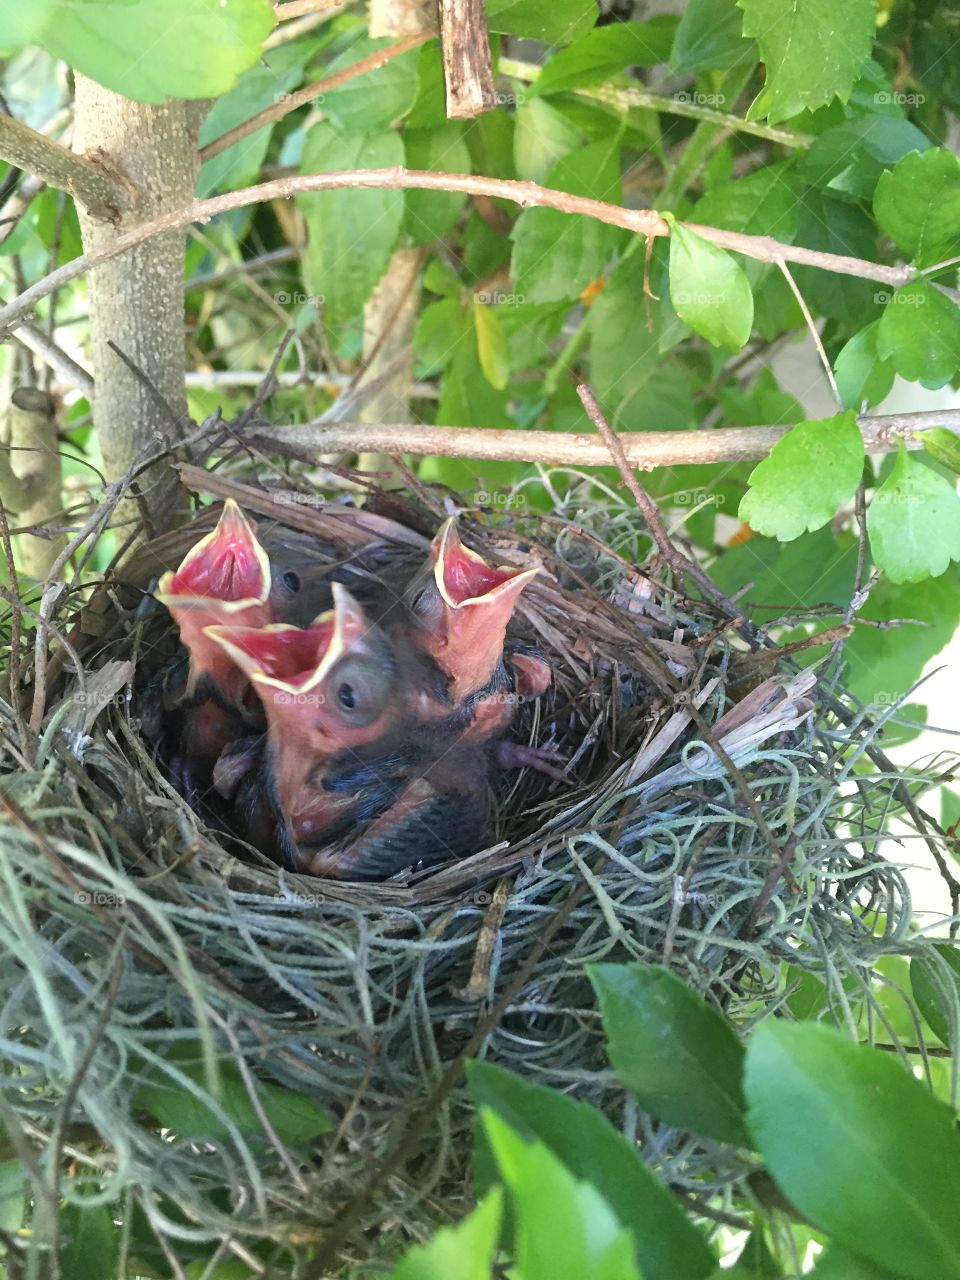 Birds nest
